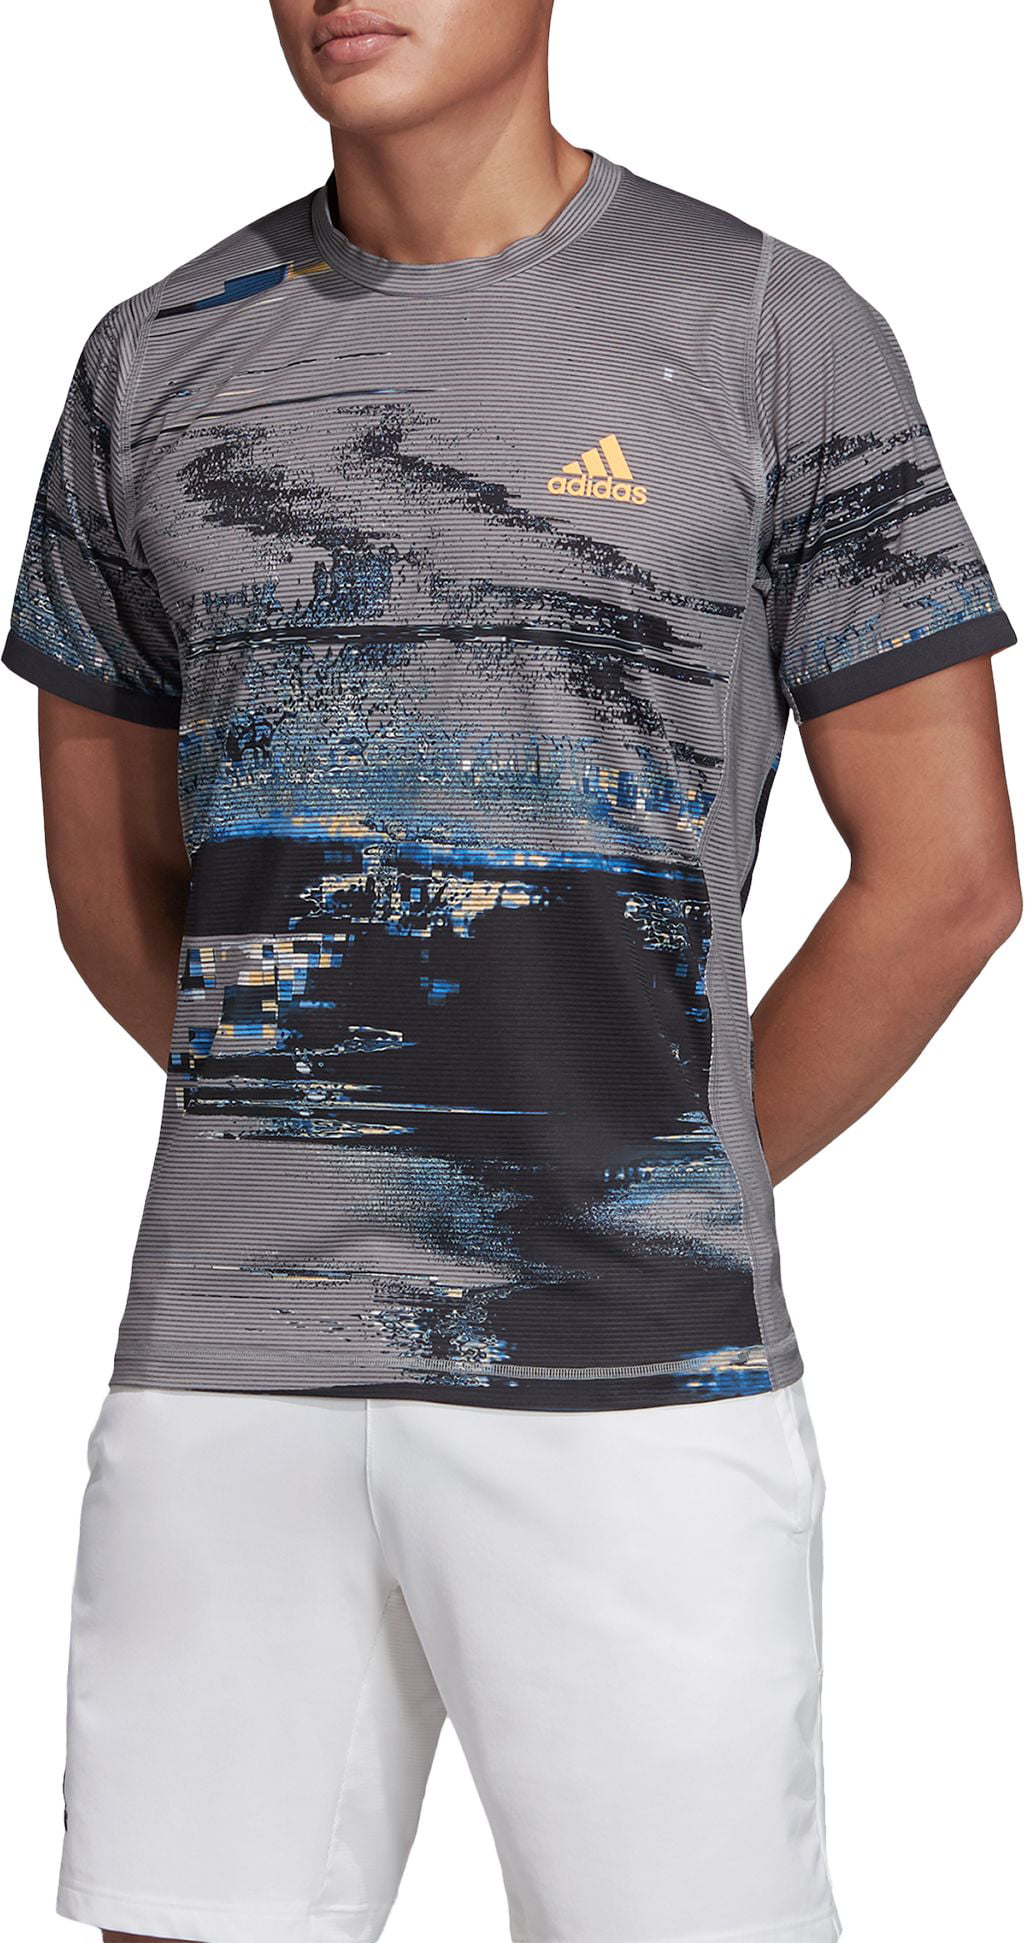 Adidas - adidas Men's New York Printed Tennis T-Shirt - Walmart.com ...